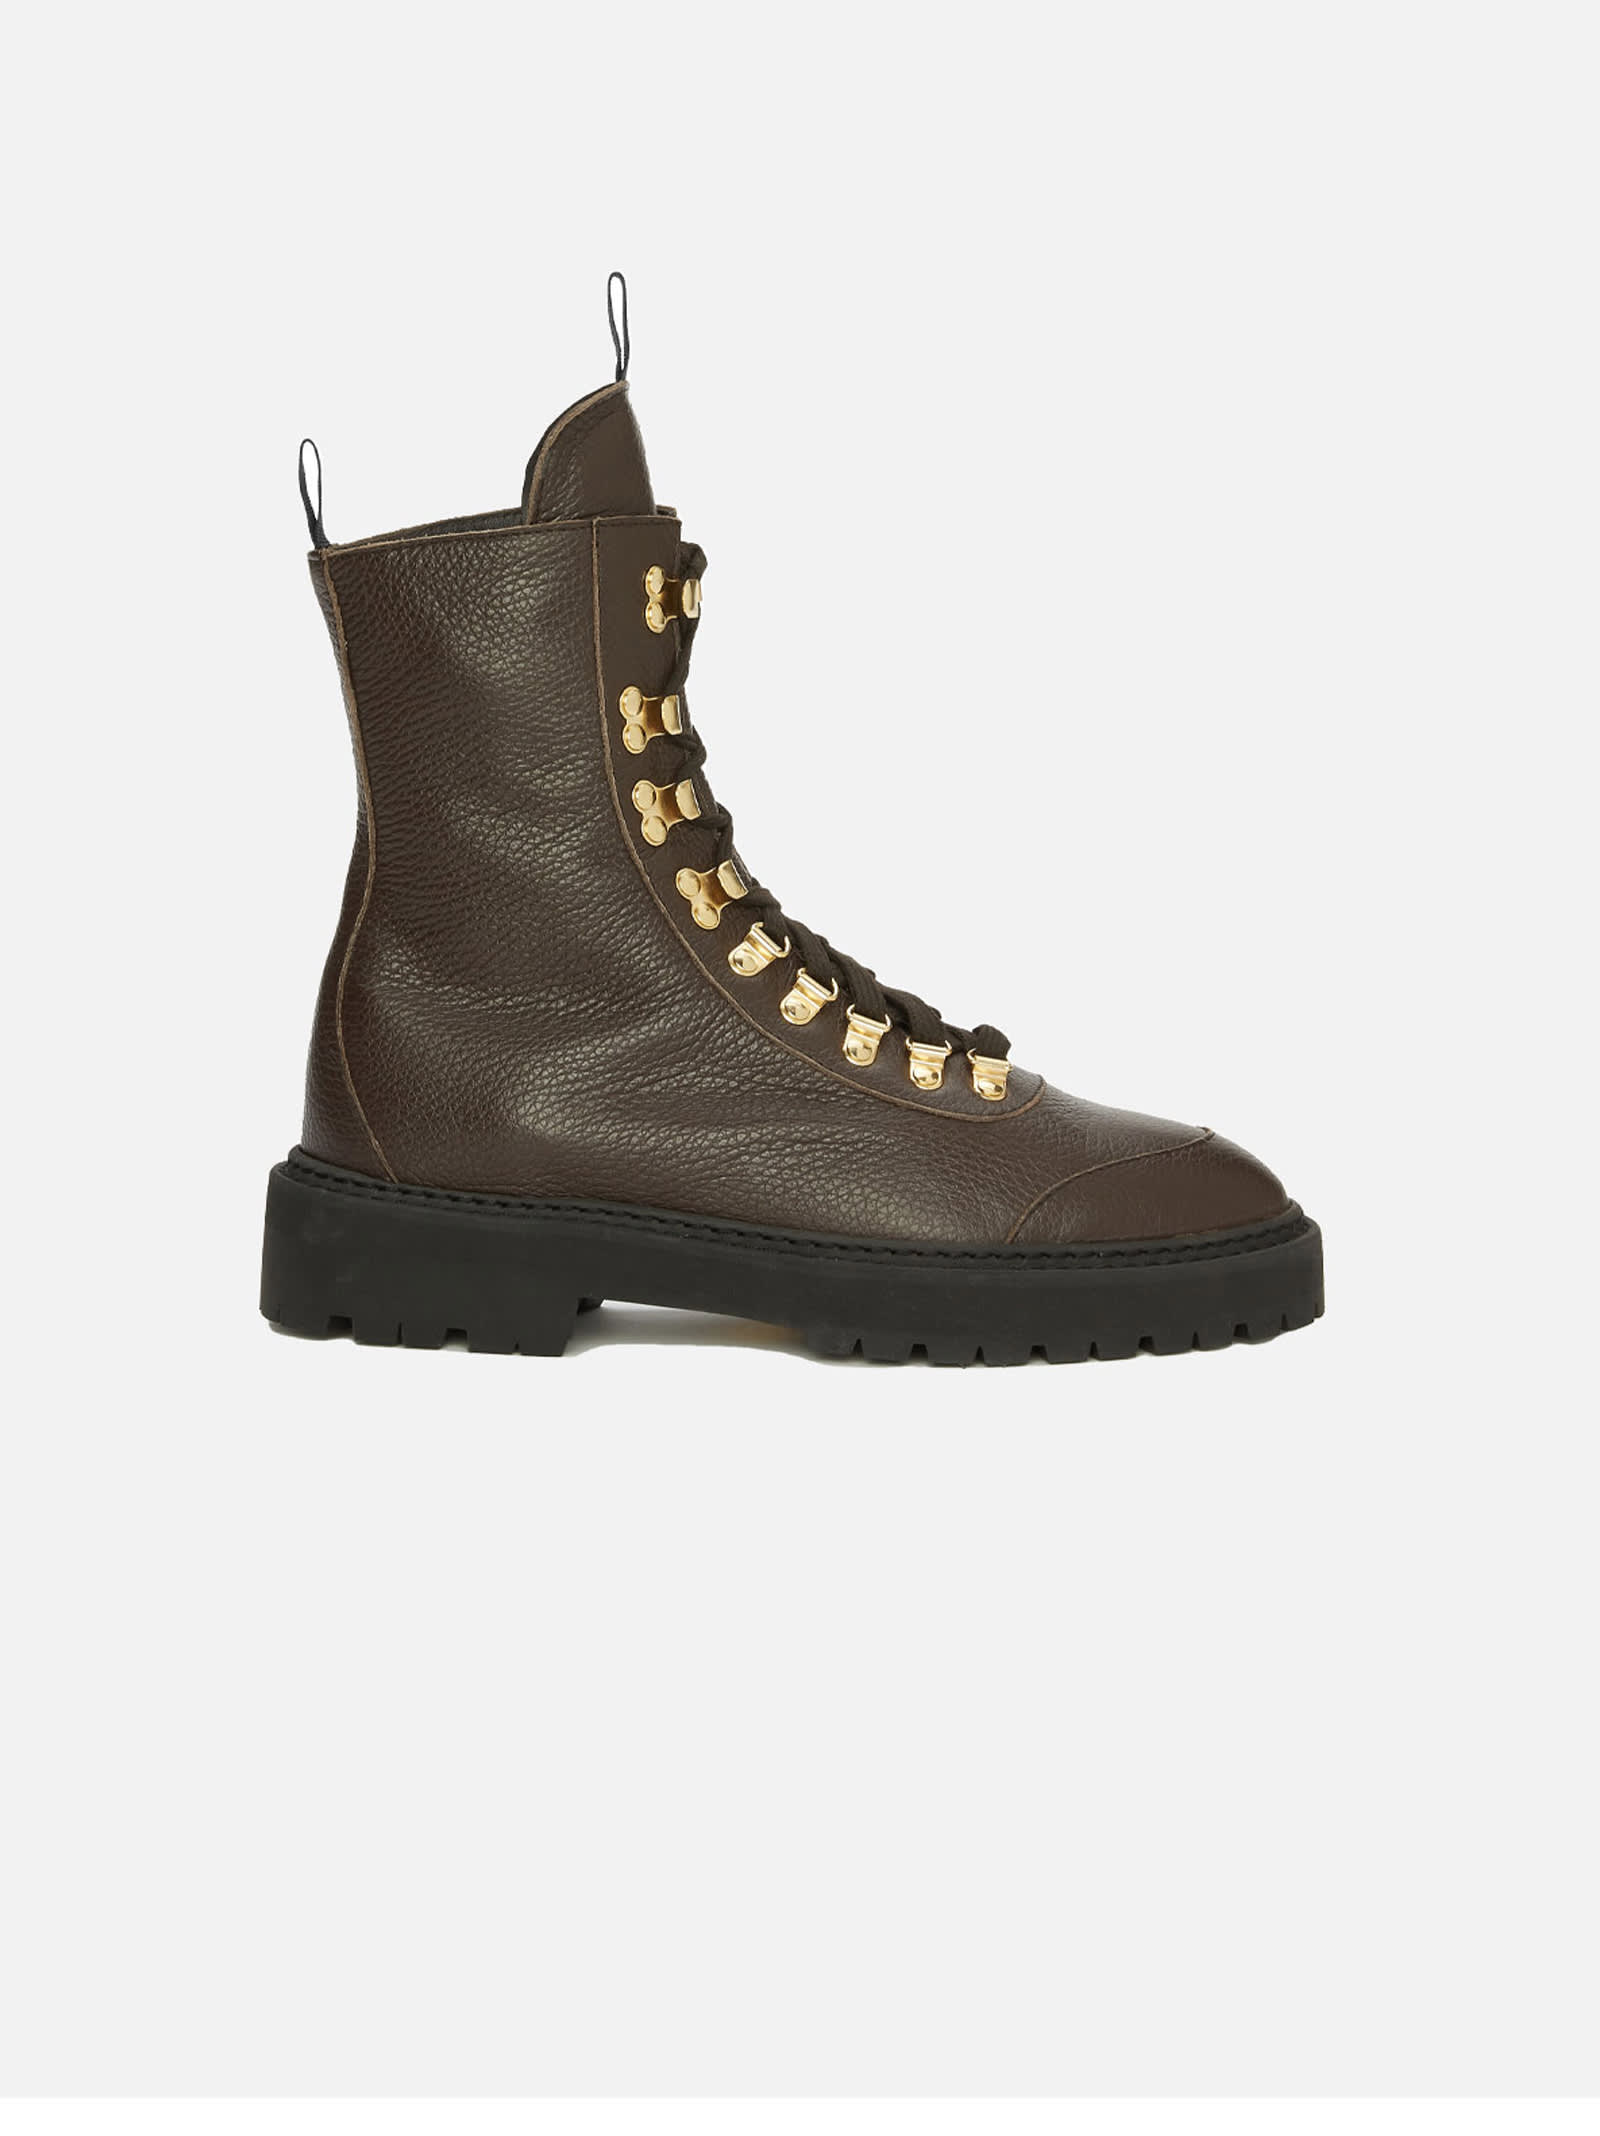 Dark Tumbled Leather Boots Sirio